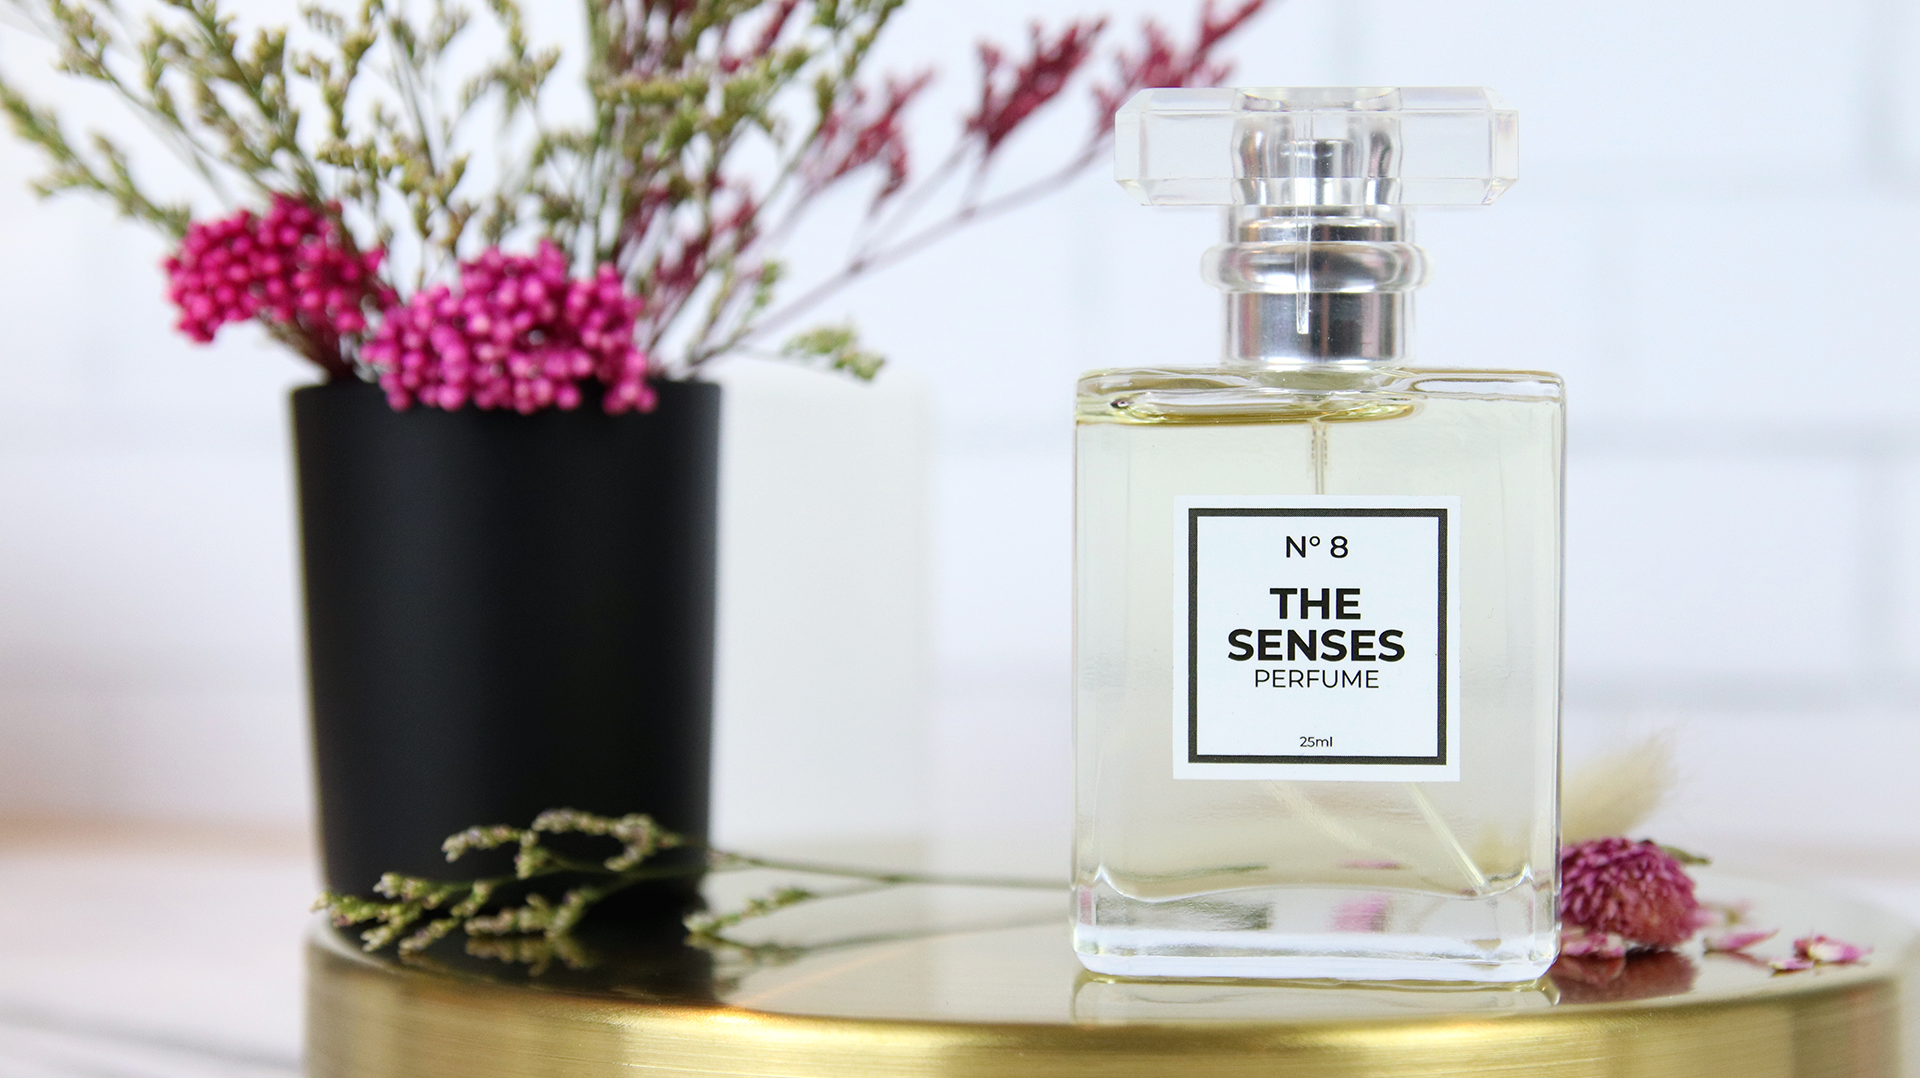 Square white vinyl sticker with the senses design applied to perfume bottle